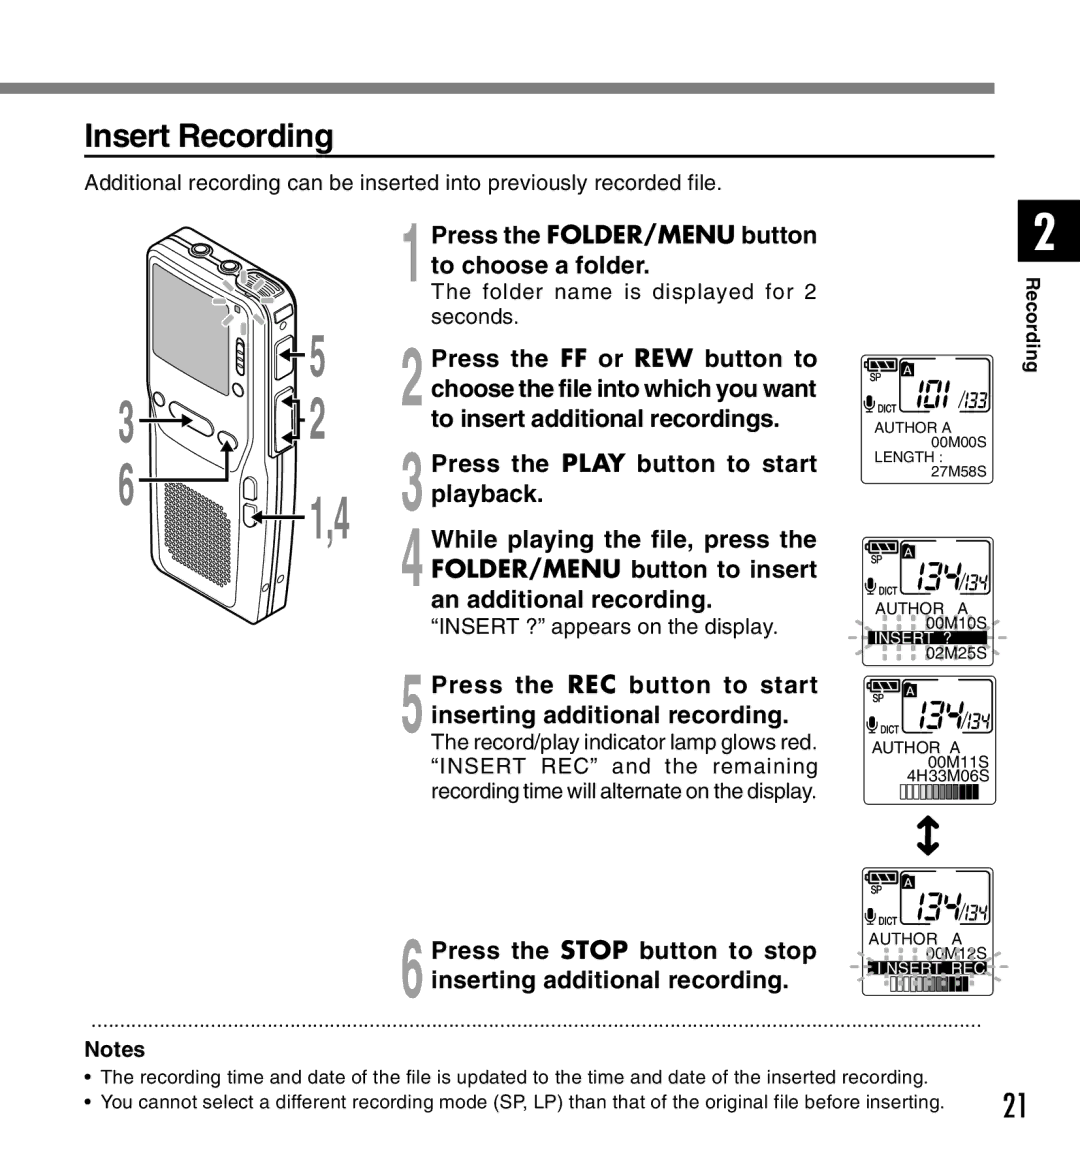 Olympus DS-2300 manual Insert Recording, 1Press the FOLDER/MENU button to choose a folder 